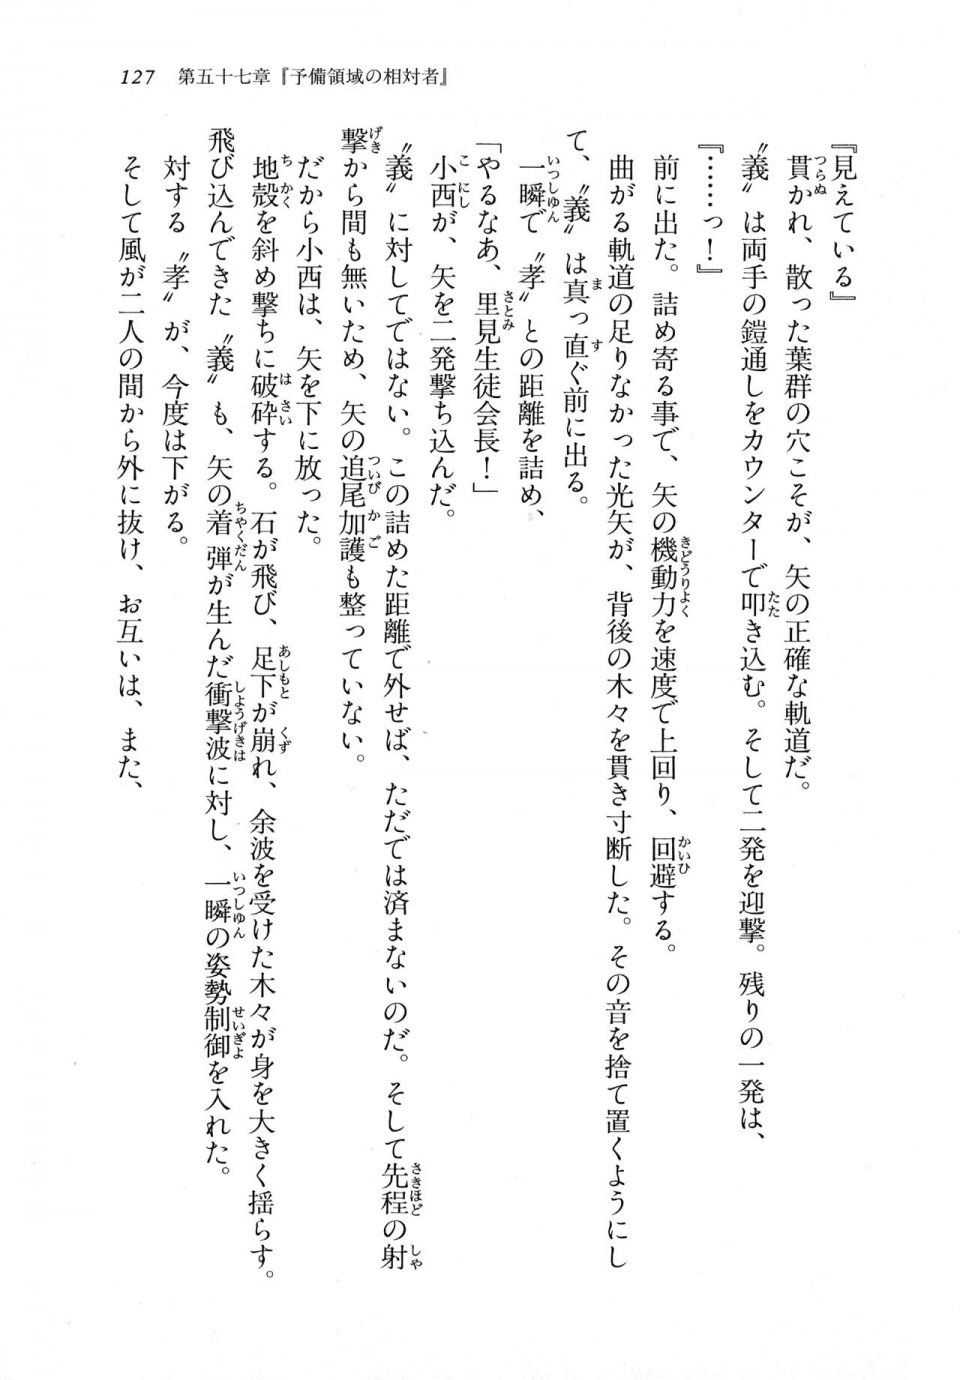 Kyoukai Senjou no Horizon LN Vol 18(7C) Part 1 - Photo #127